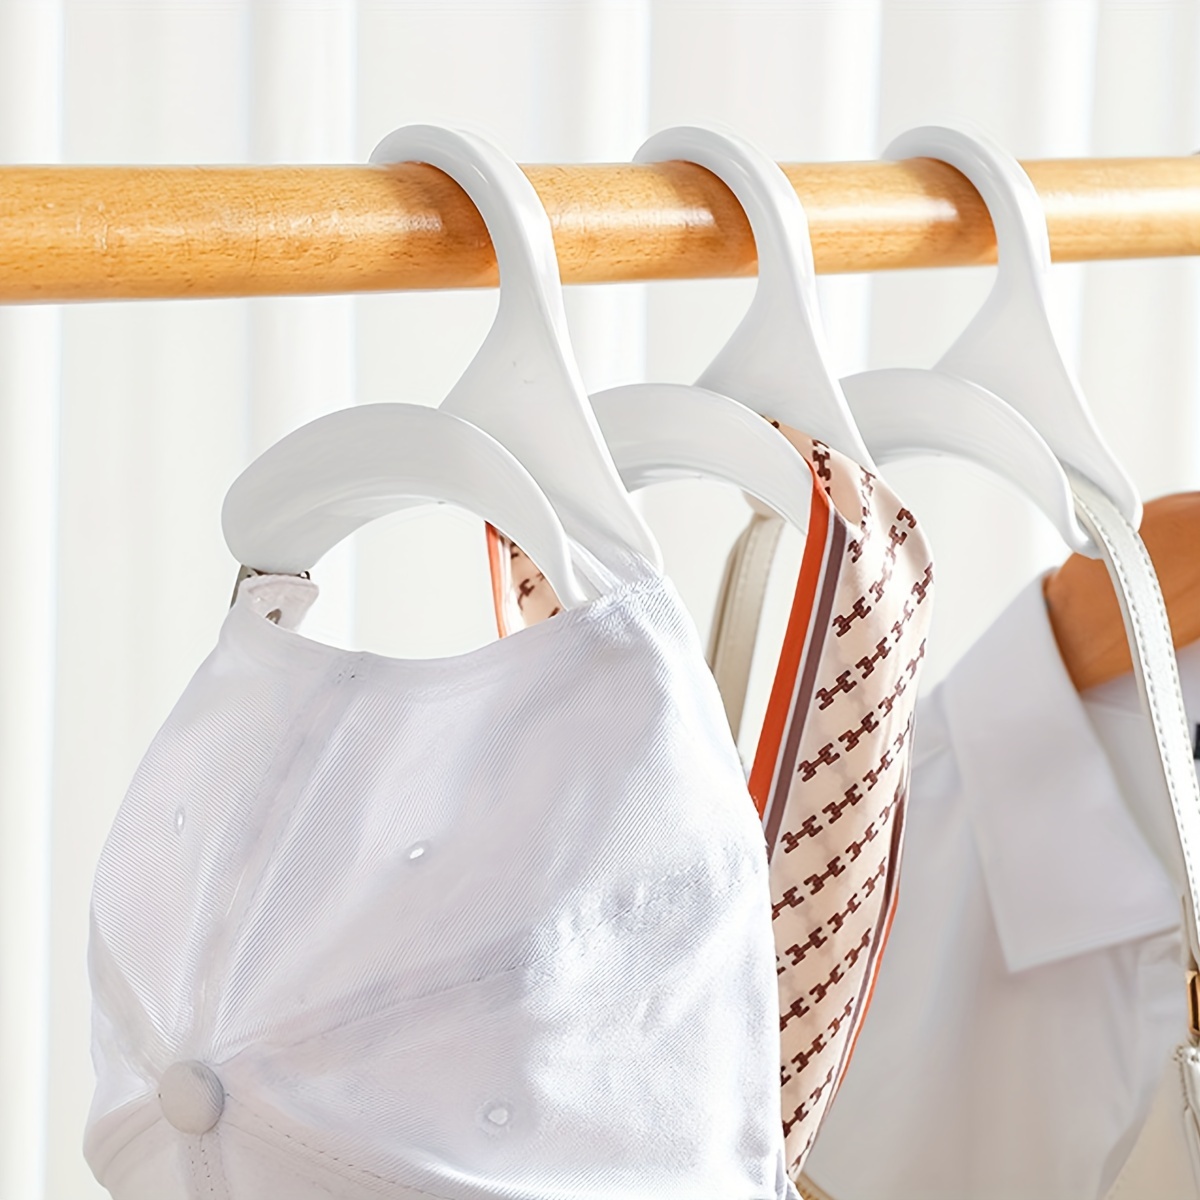 6pcs Purse Hanger Hook Bag Rack Holder - Handbag Hanger Organizer Storage -  Over The Closet Rod Hanger for Storing and Organizing Purses, Backpacks, Satchels, Crossovers, Handbags